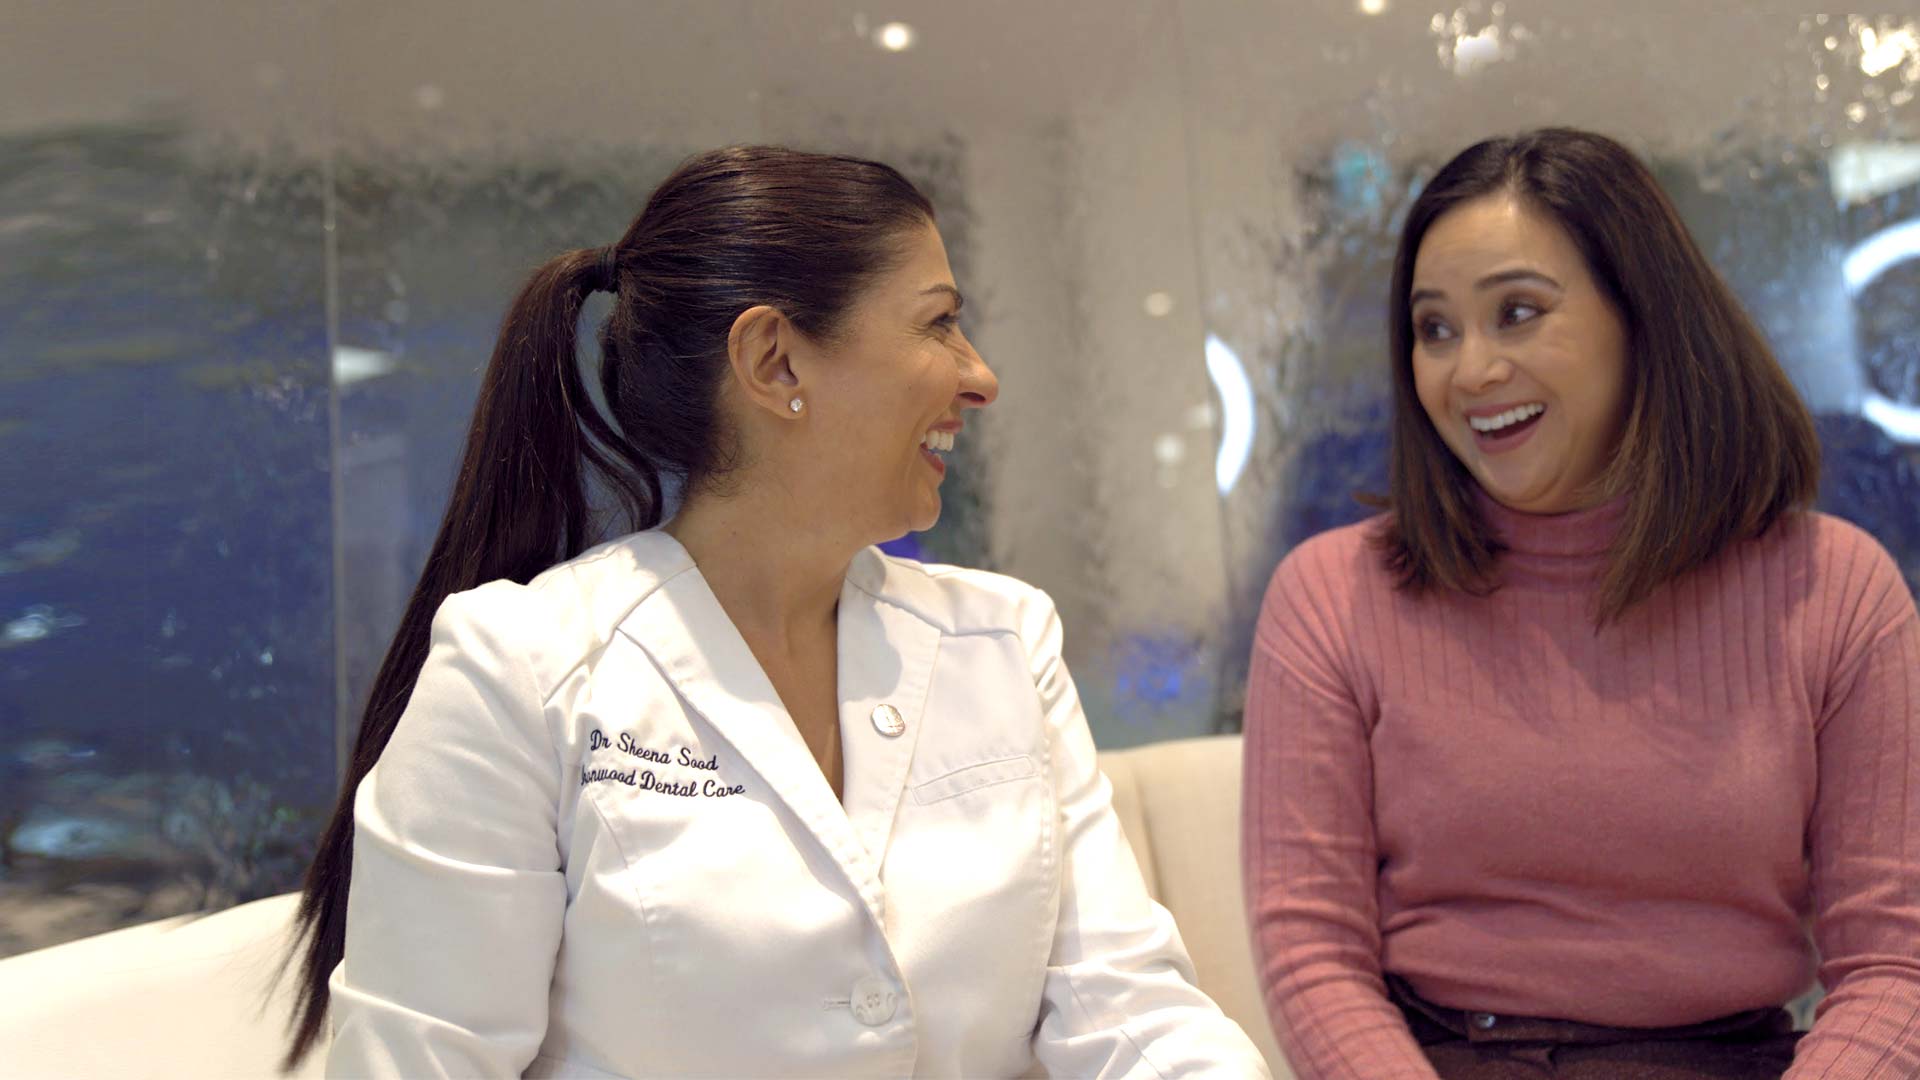 Dr Sheena Sood talking with a Digital Smile Design patient at Ironwood Dental Care.